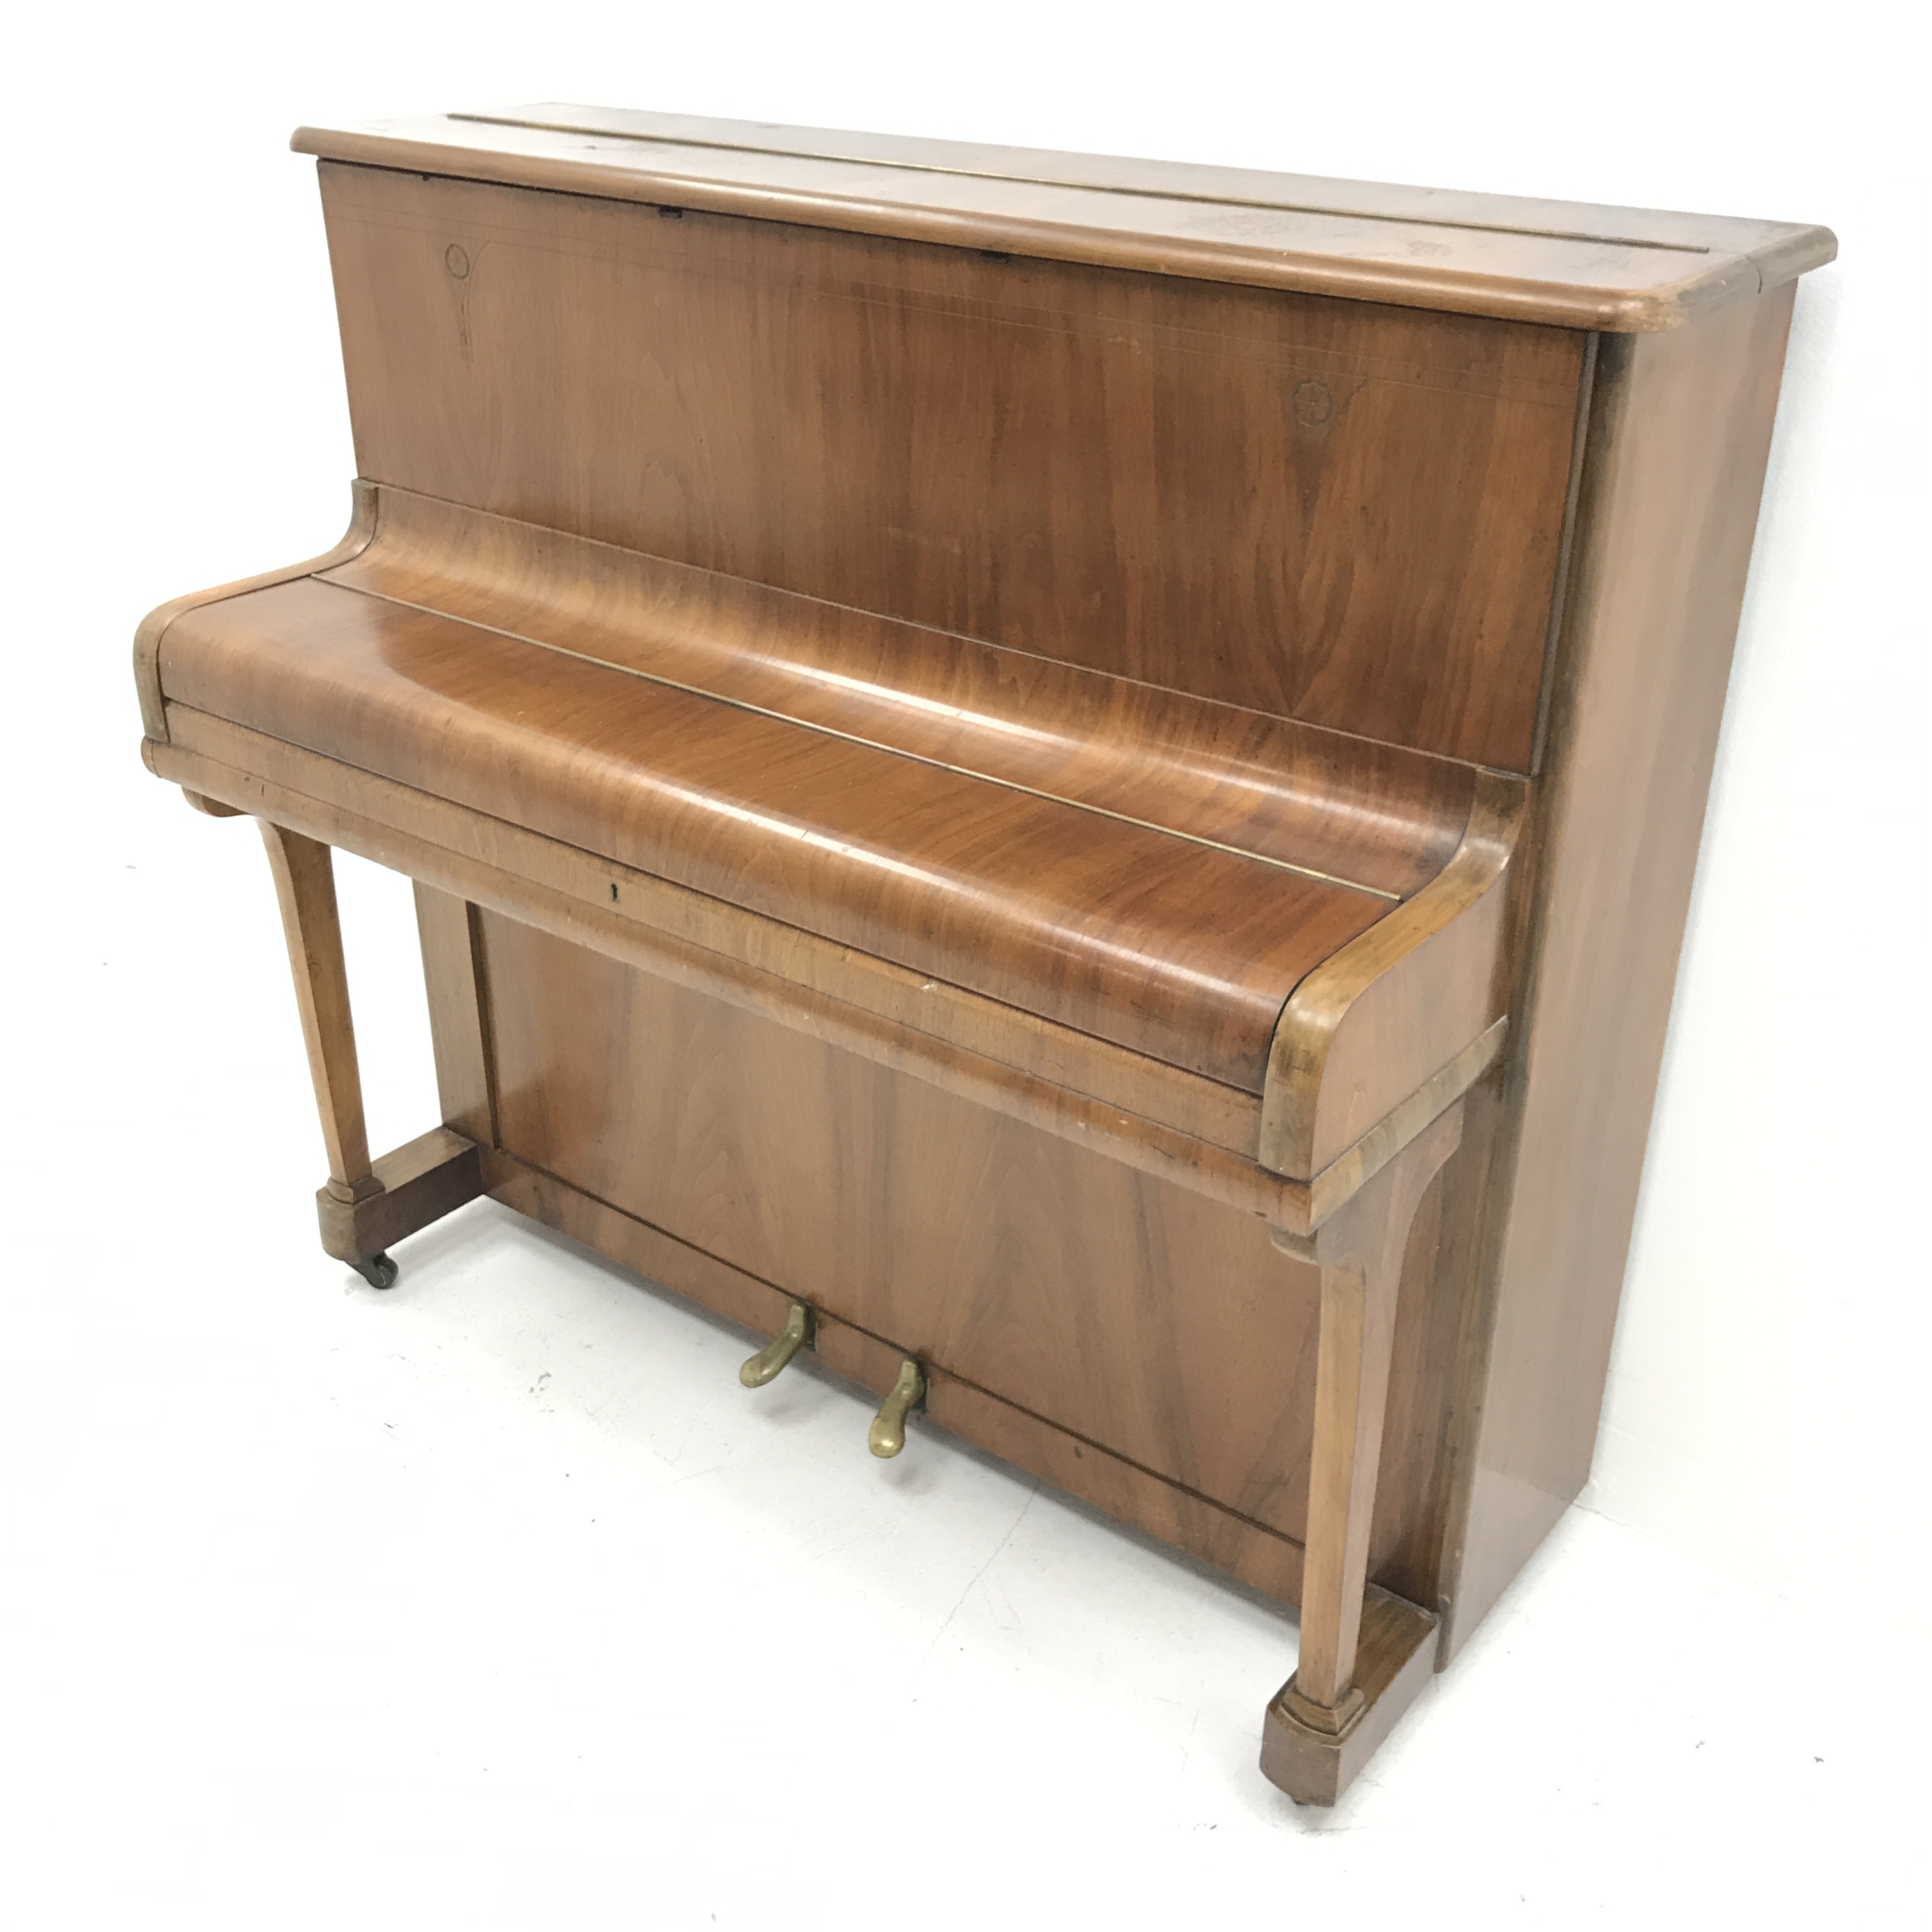 Godfrey walnut cased overstrung upright piano, W124cm, H113cm - Image 8 of 10